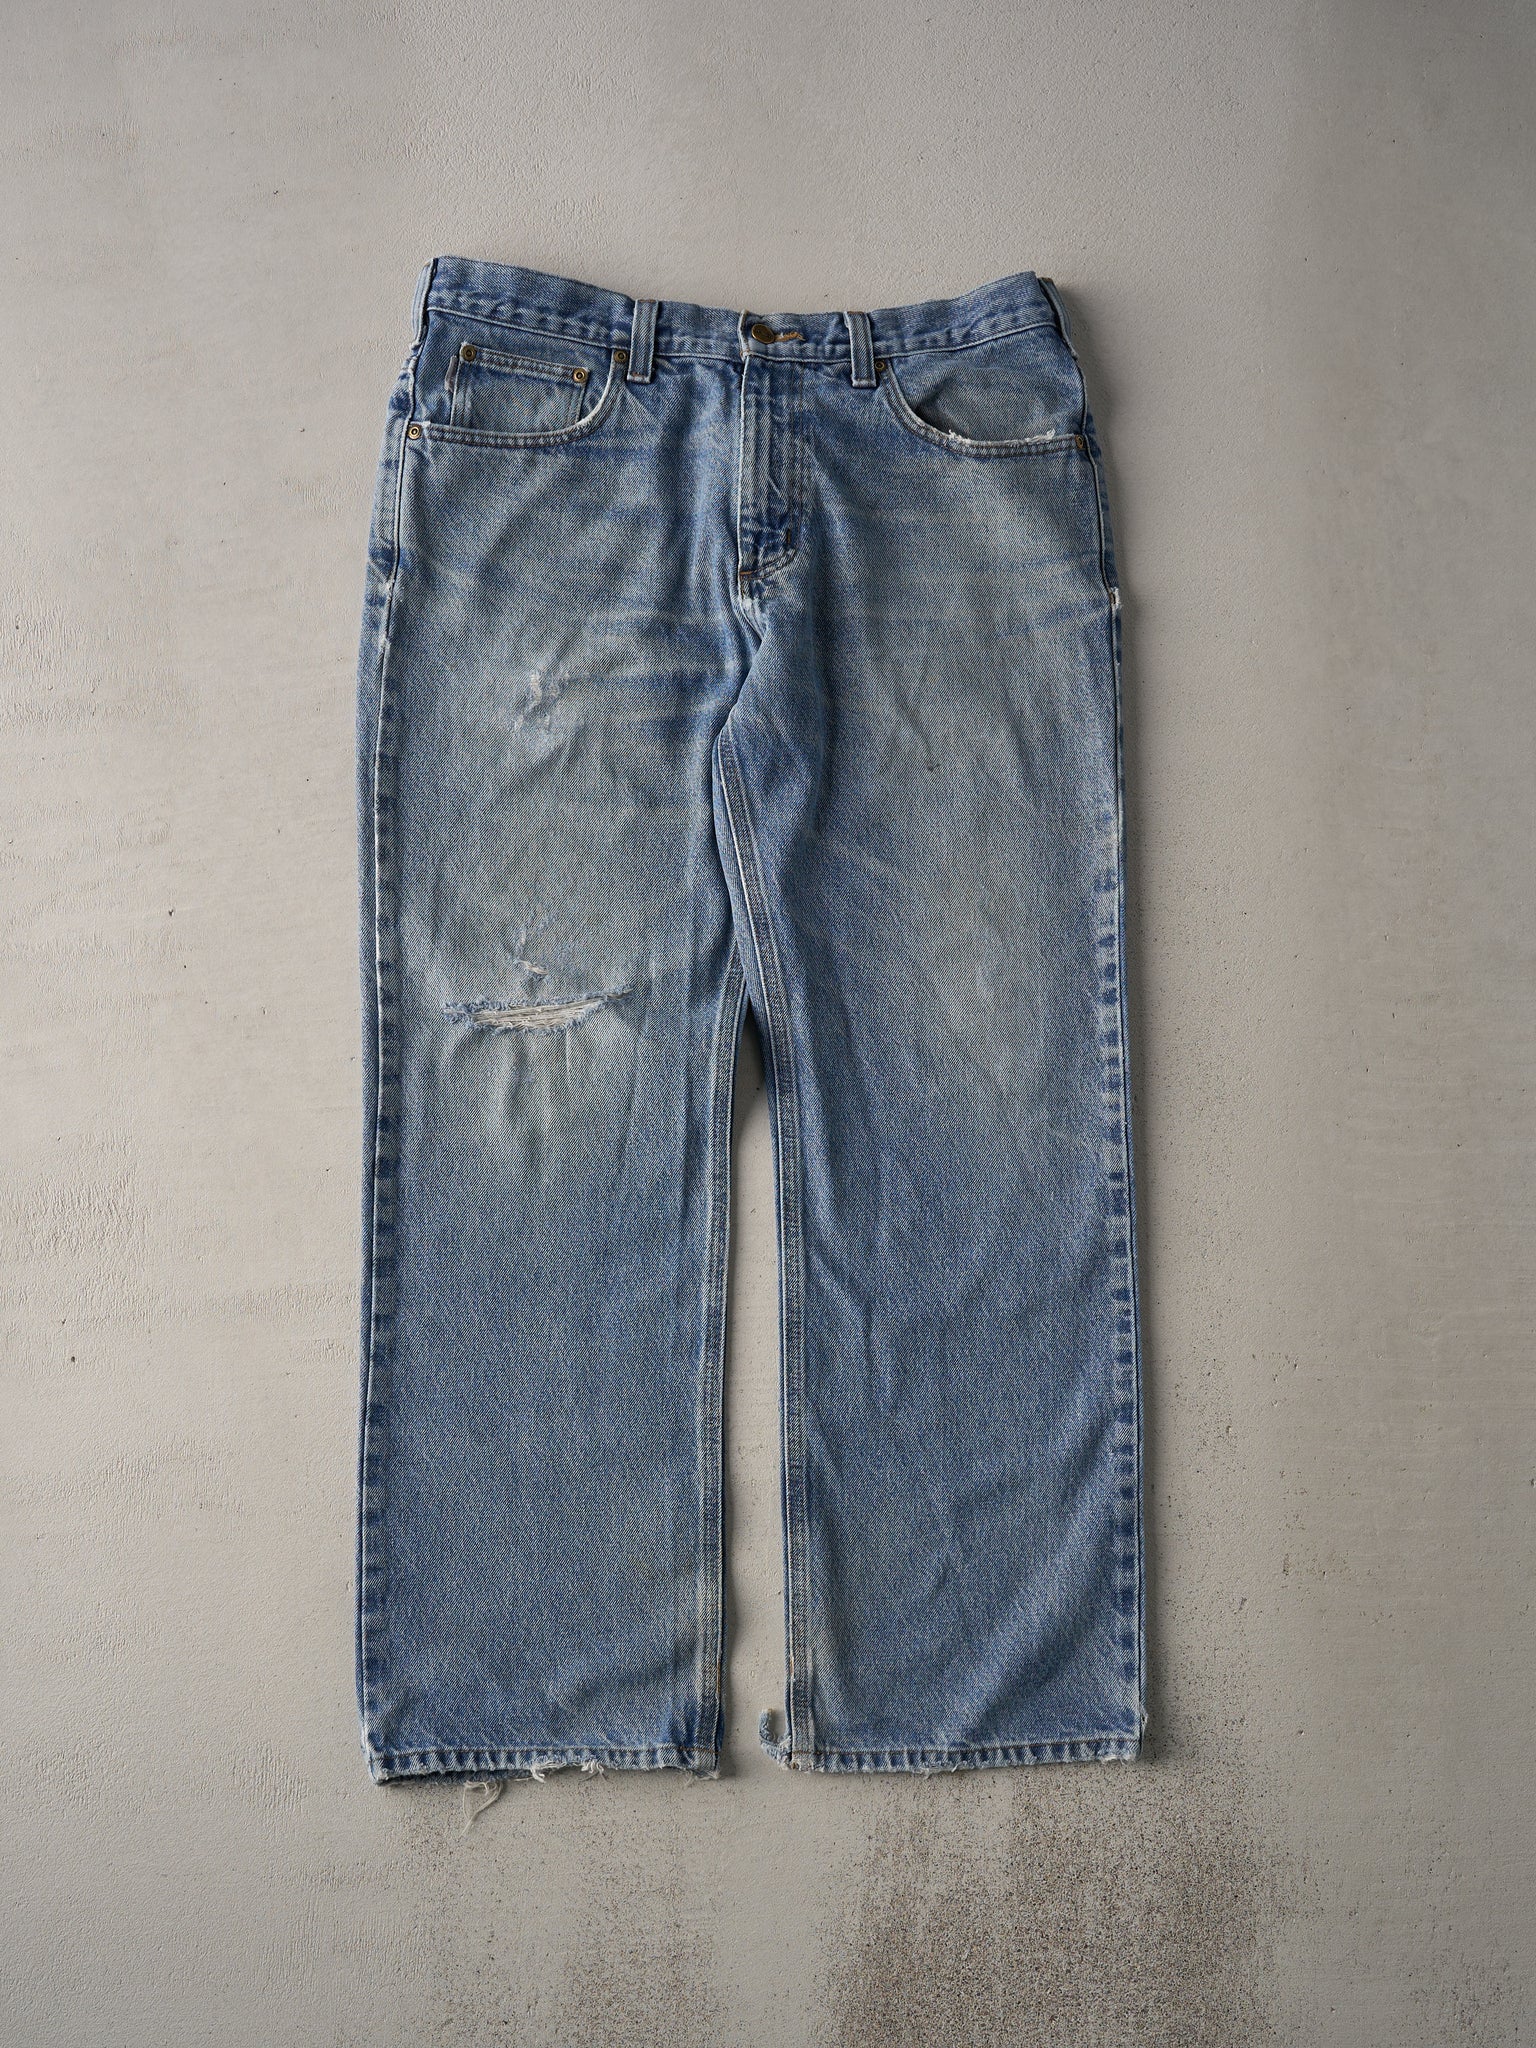 Vintage Light Wash Carhartt Loose Fit Jeans (35x30)